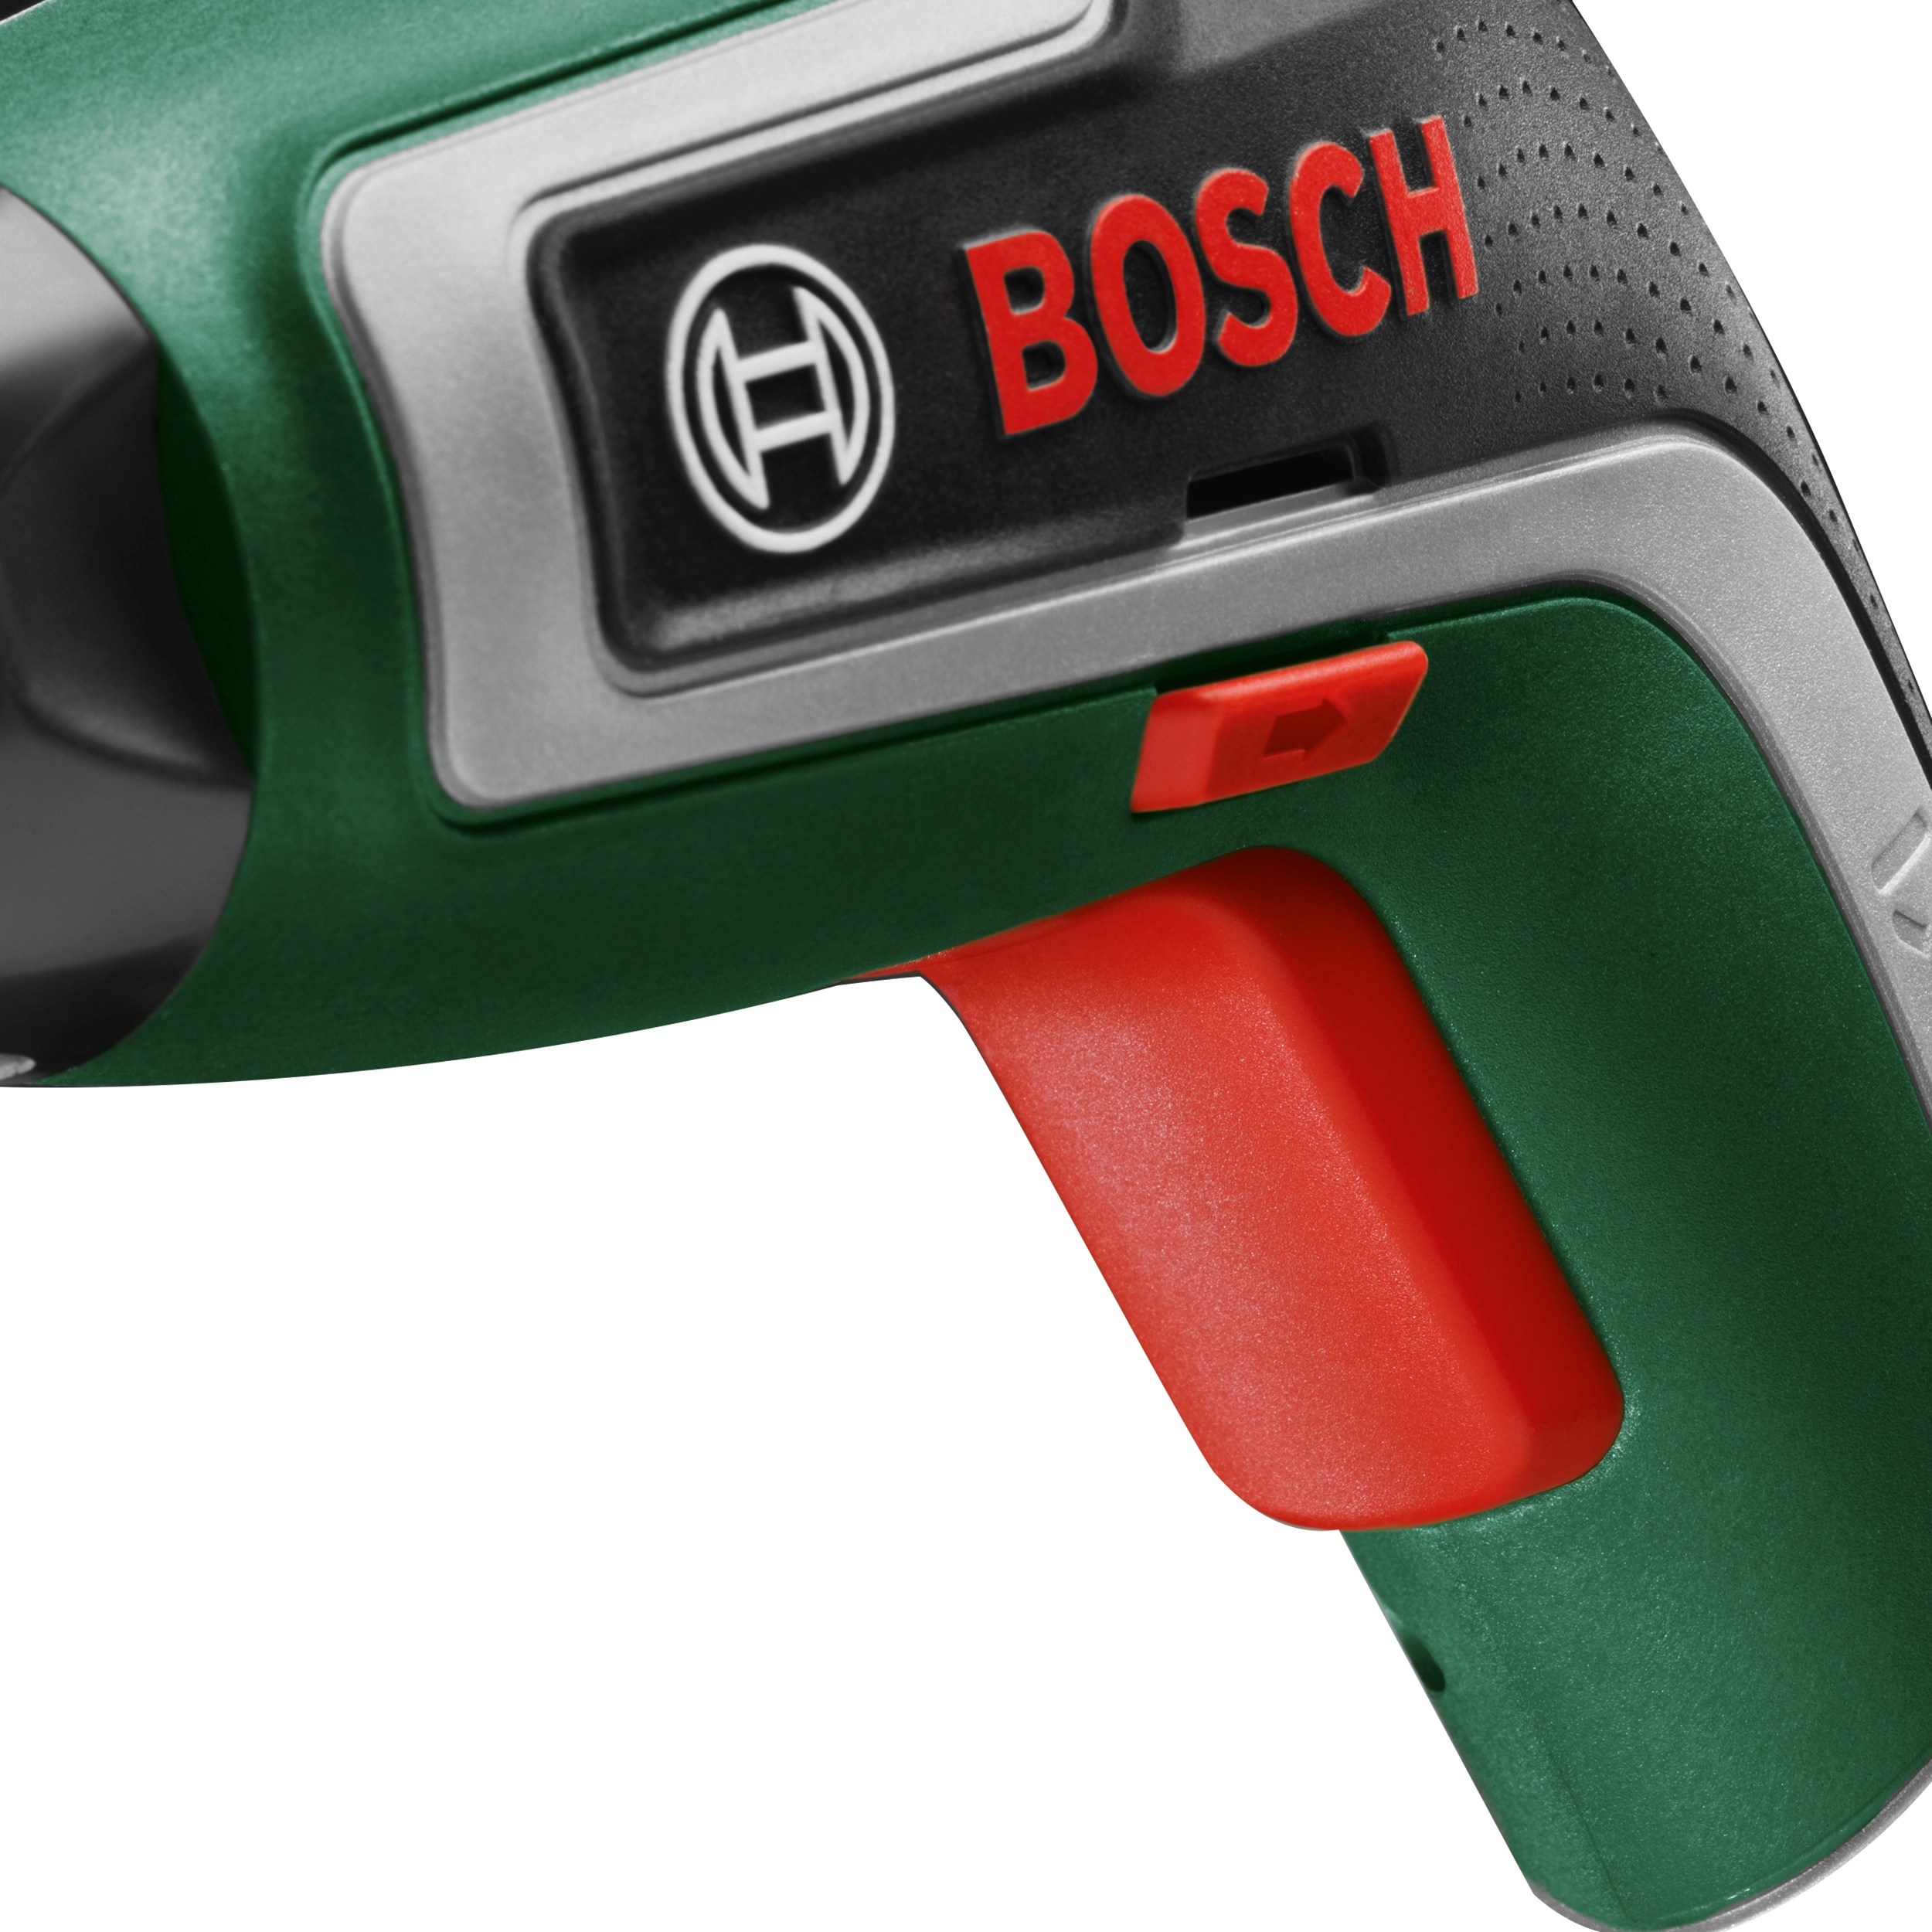 La visseuse sans fil Bosch IXO